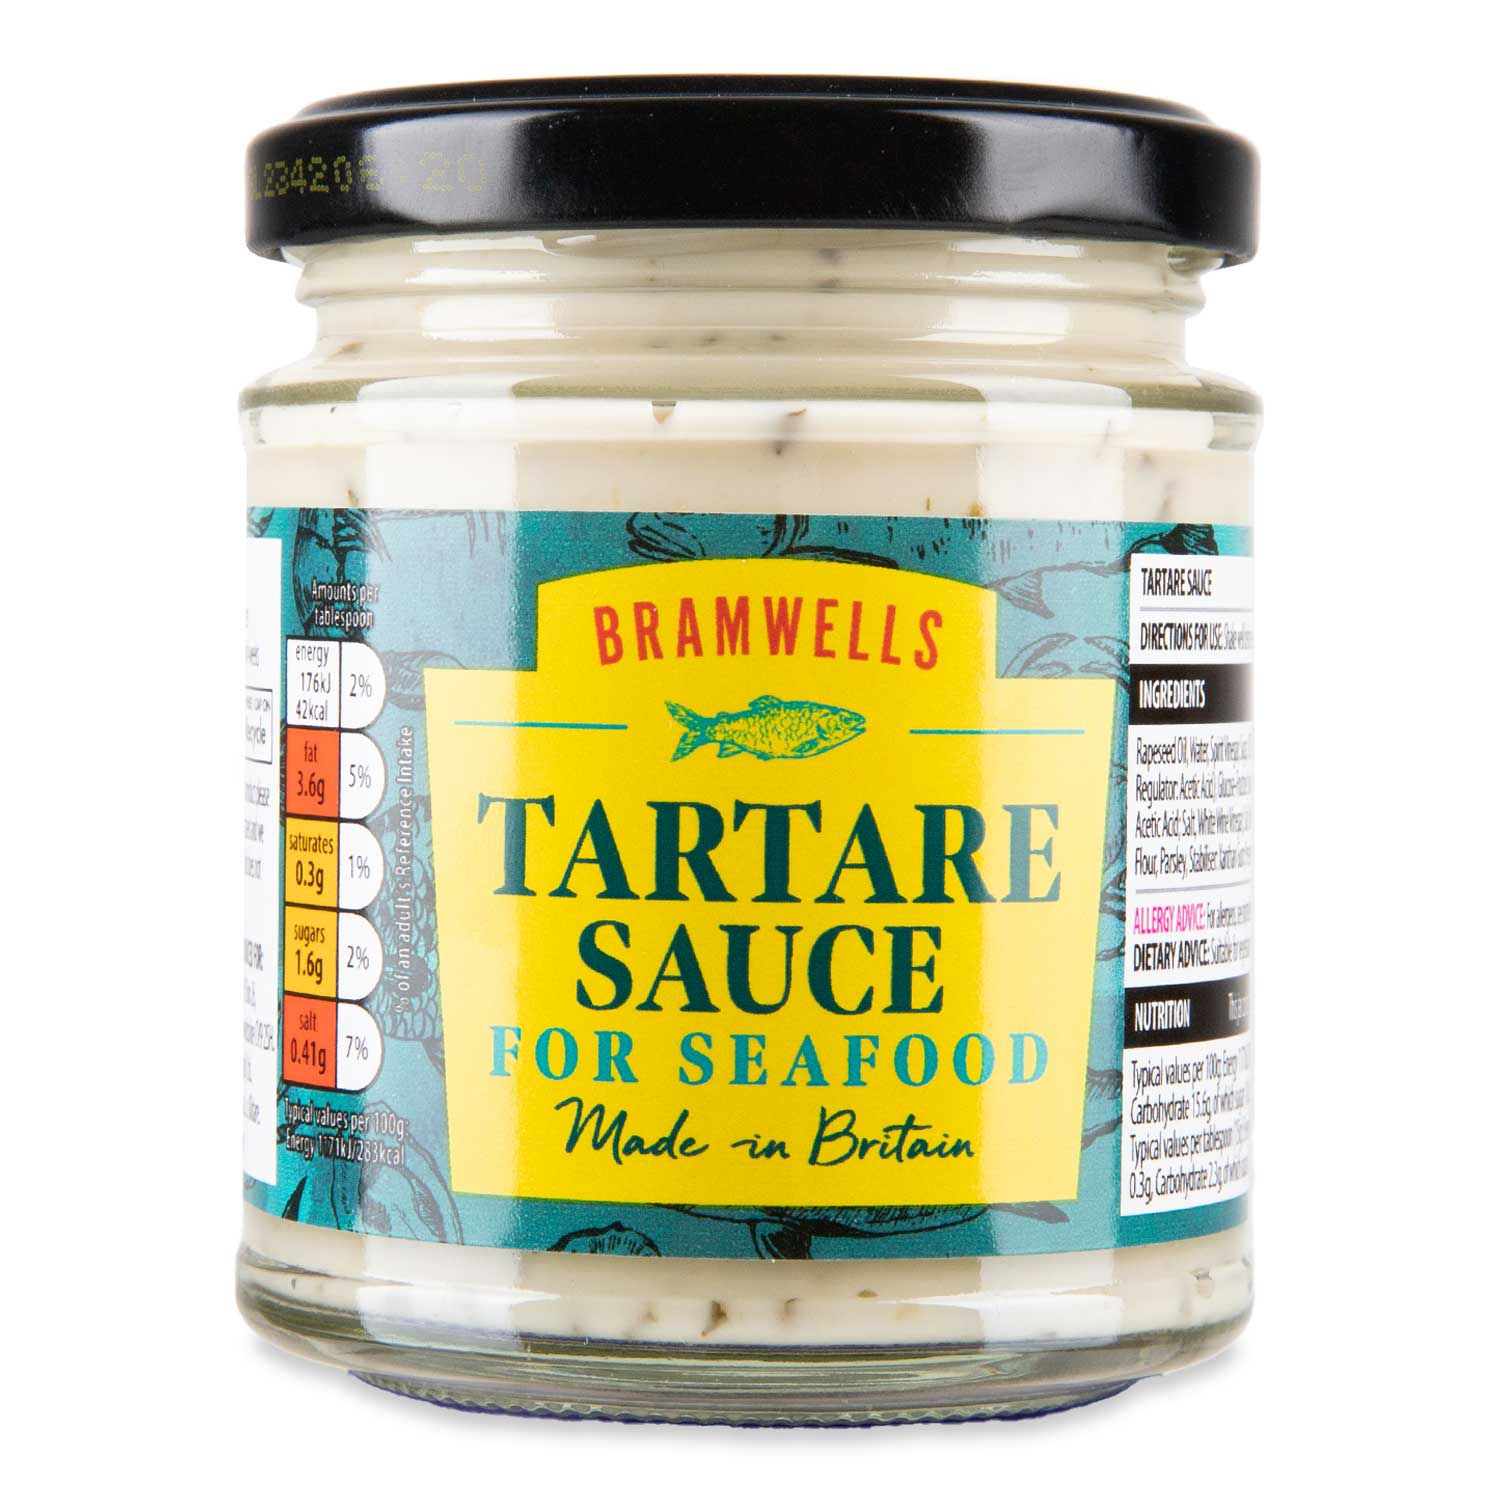 A glass jar of Aldi Bramwells Tartare Sauce